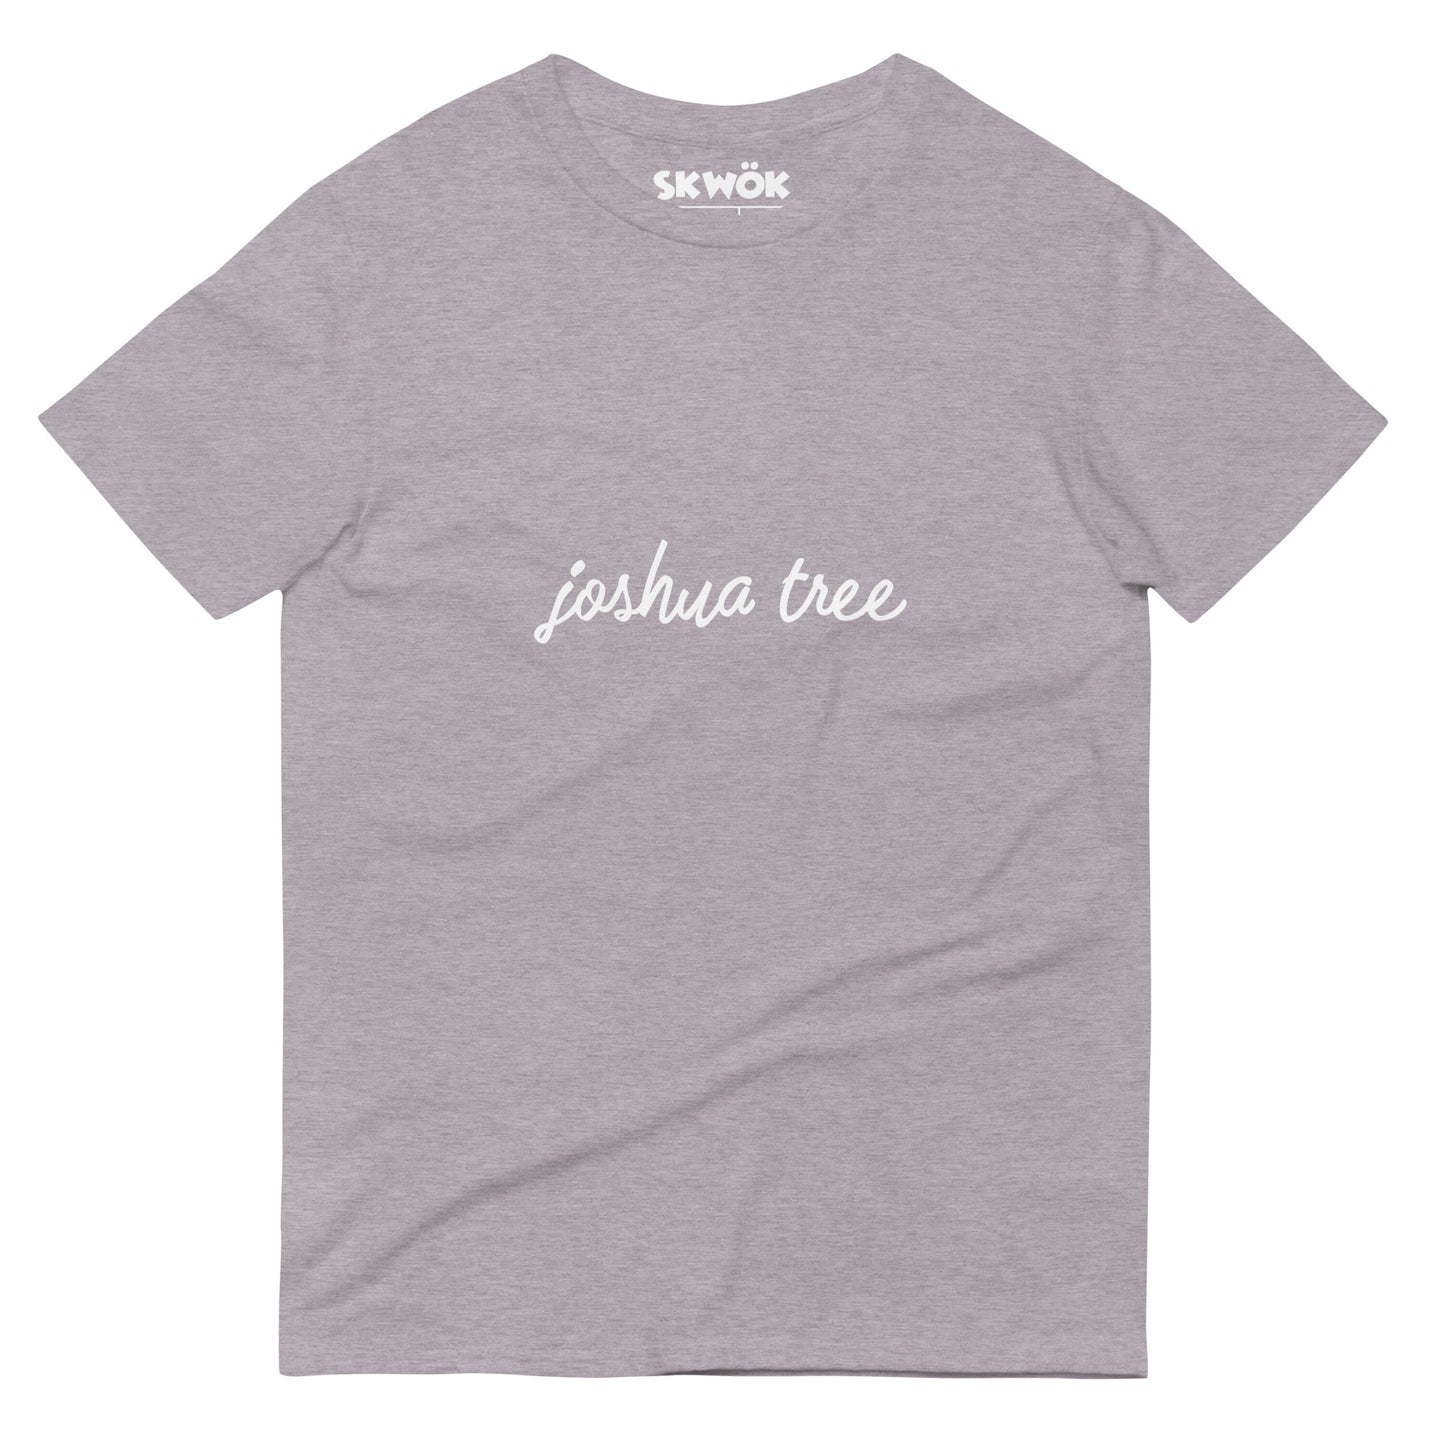 Kranik Brand / T-Shirt / Joshua Tree II